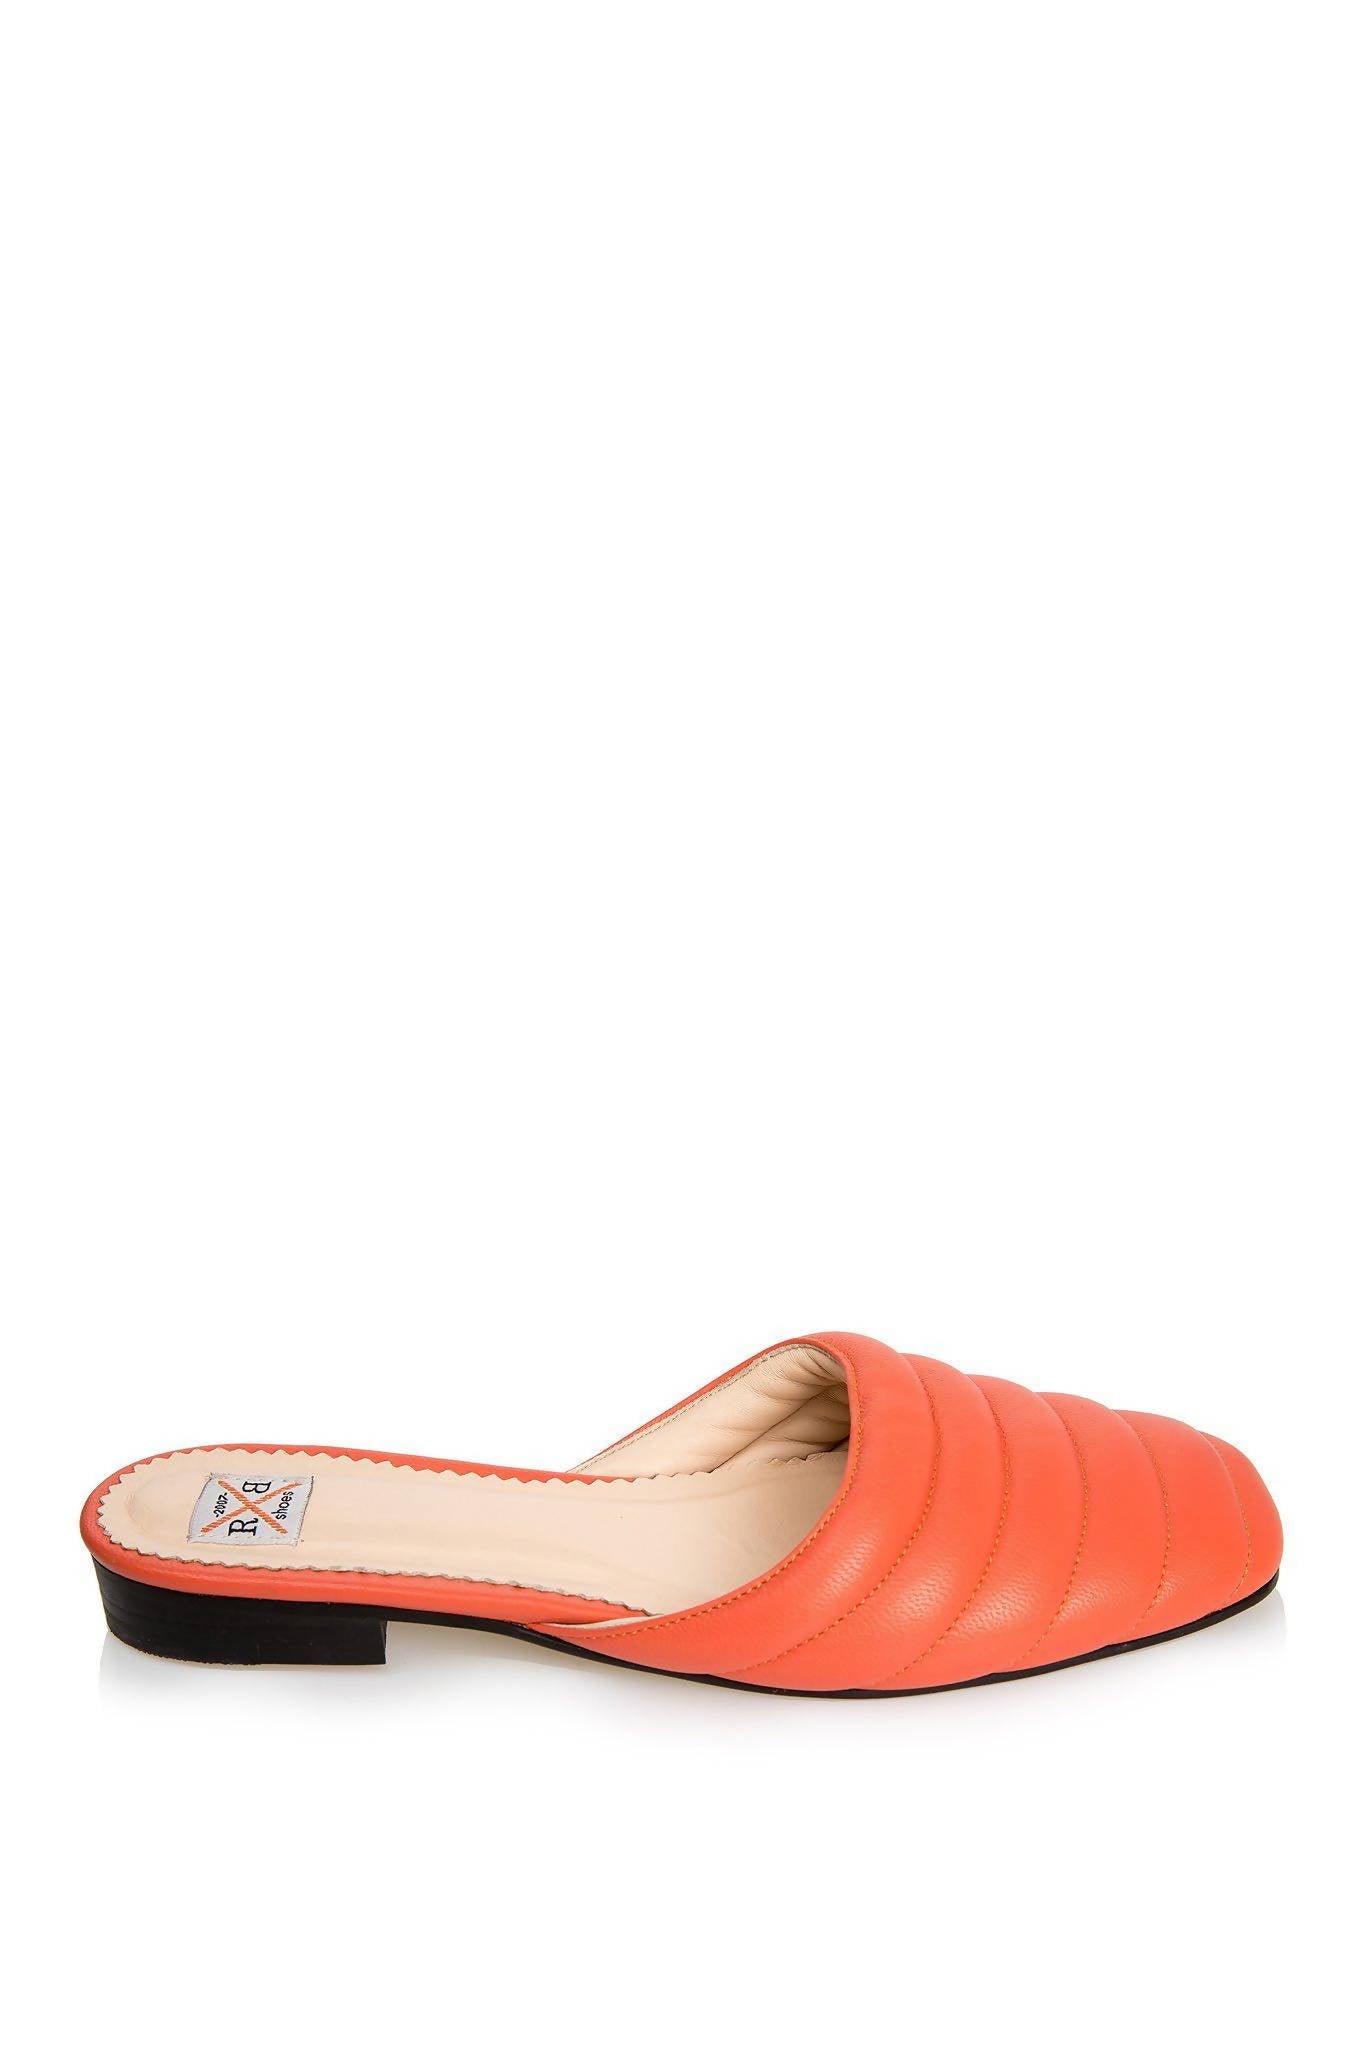 orange mules shoes